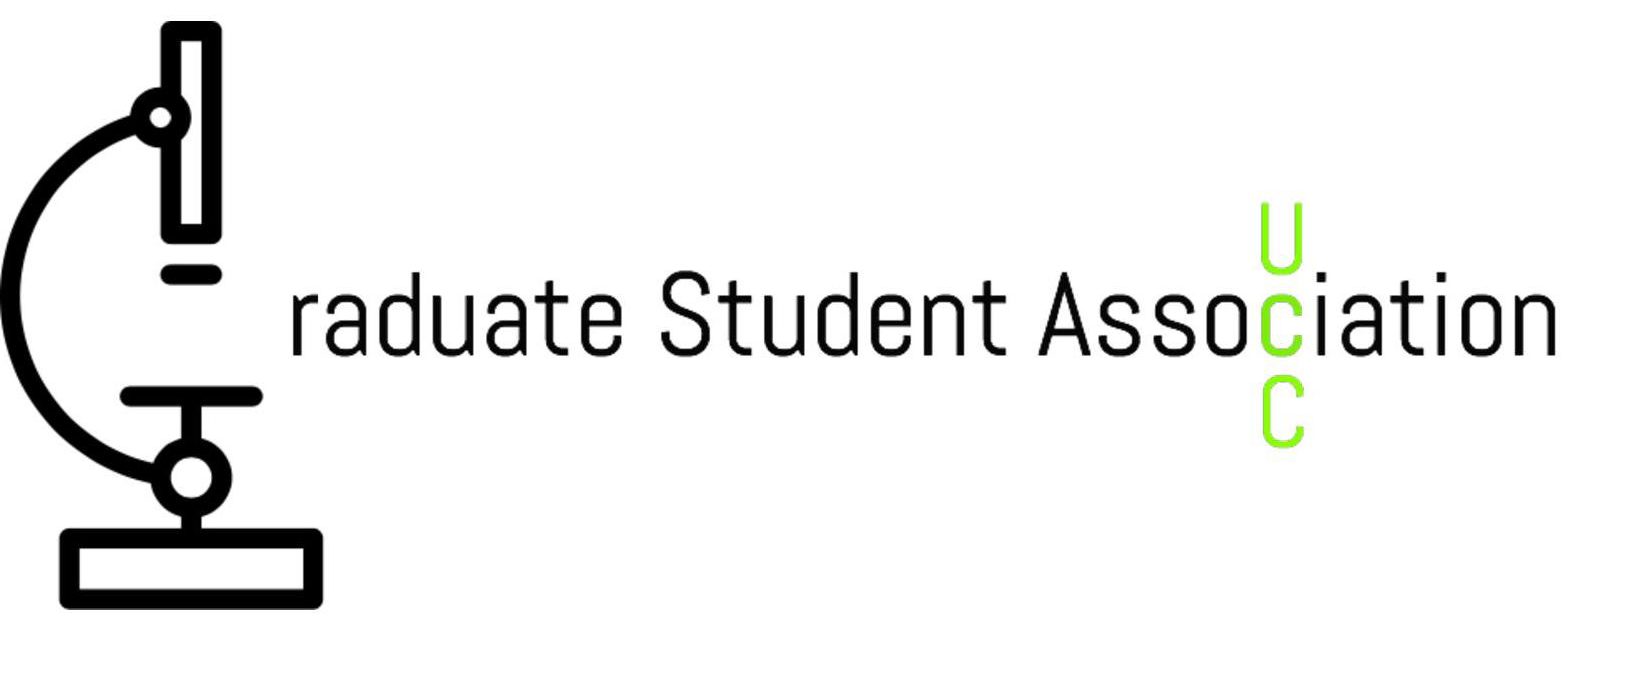 Graduate Student Association 